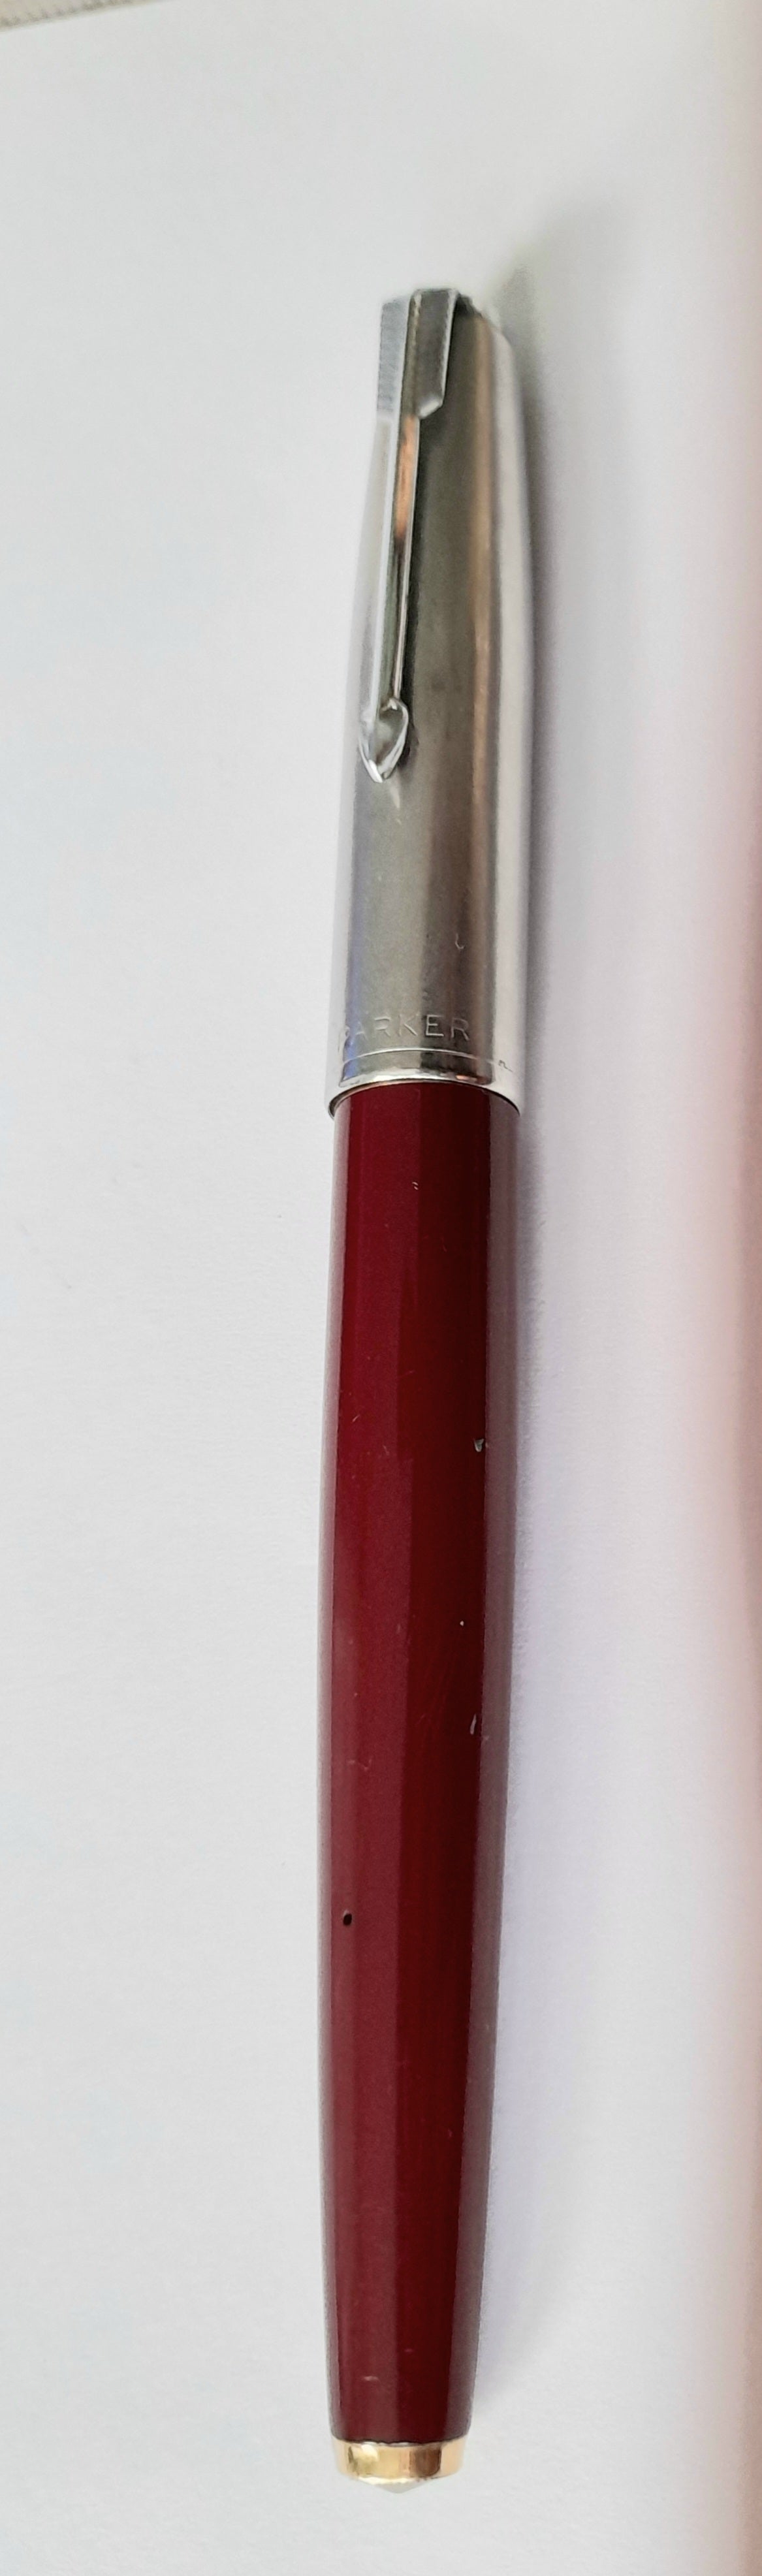 Parker 51 Silveralloy Cap and Crimson Body Fountain Pen.